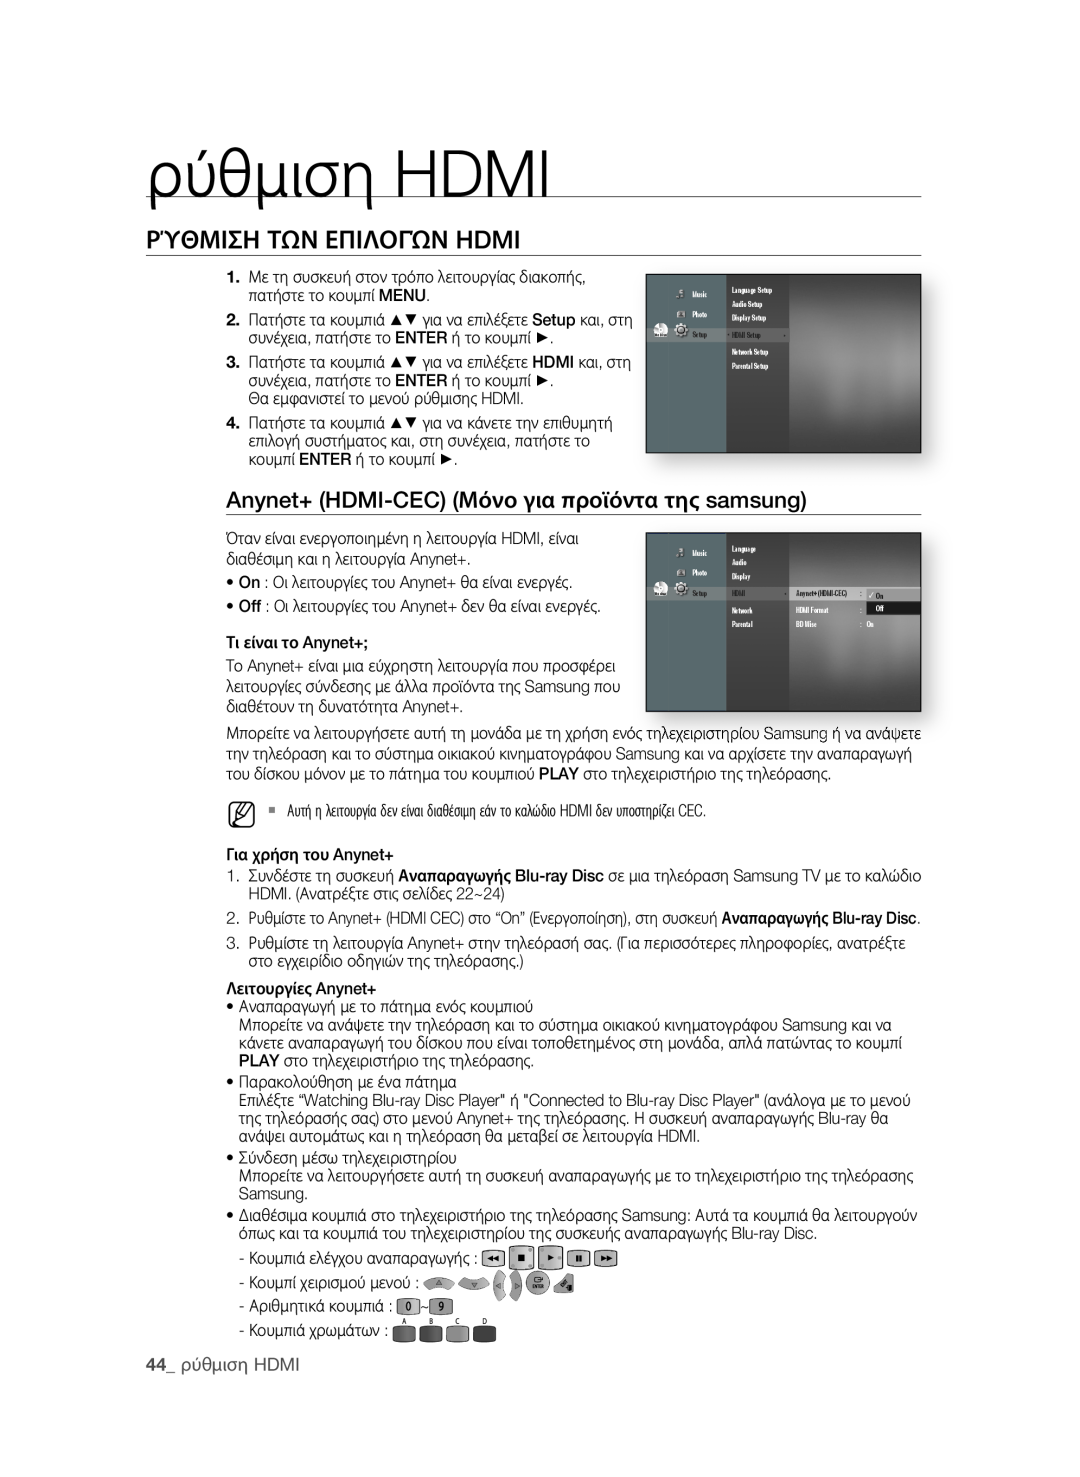 Samsung BD-P1580/EDC manual ρύθμιση HDMI, ρΎθΜιση ΤΩΝ εΠιΛοΓώΝ HDMI, Anynet+ HDMI-CEC Μόνο για προϊόντα της samsung 